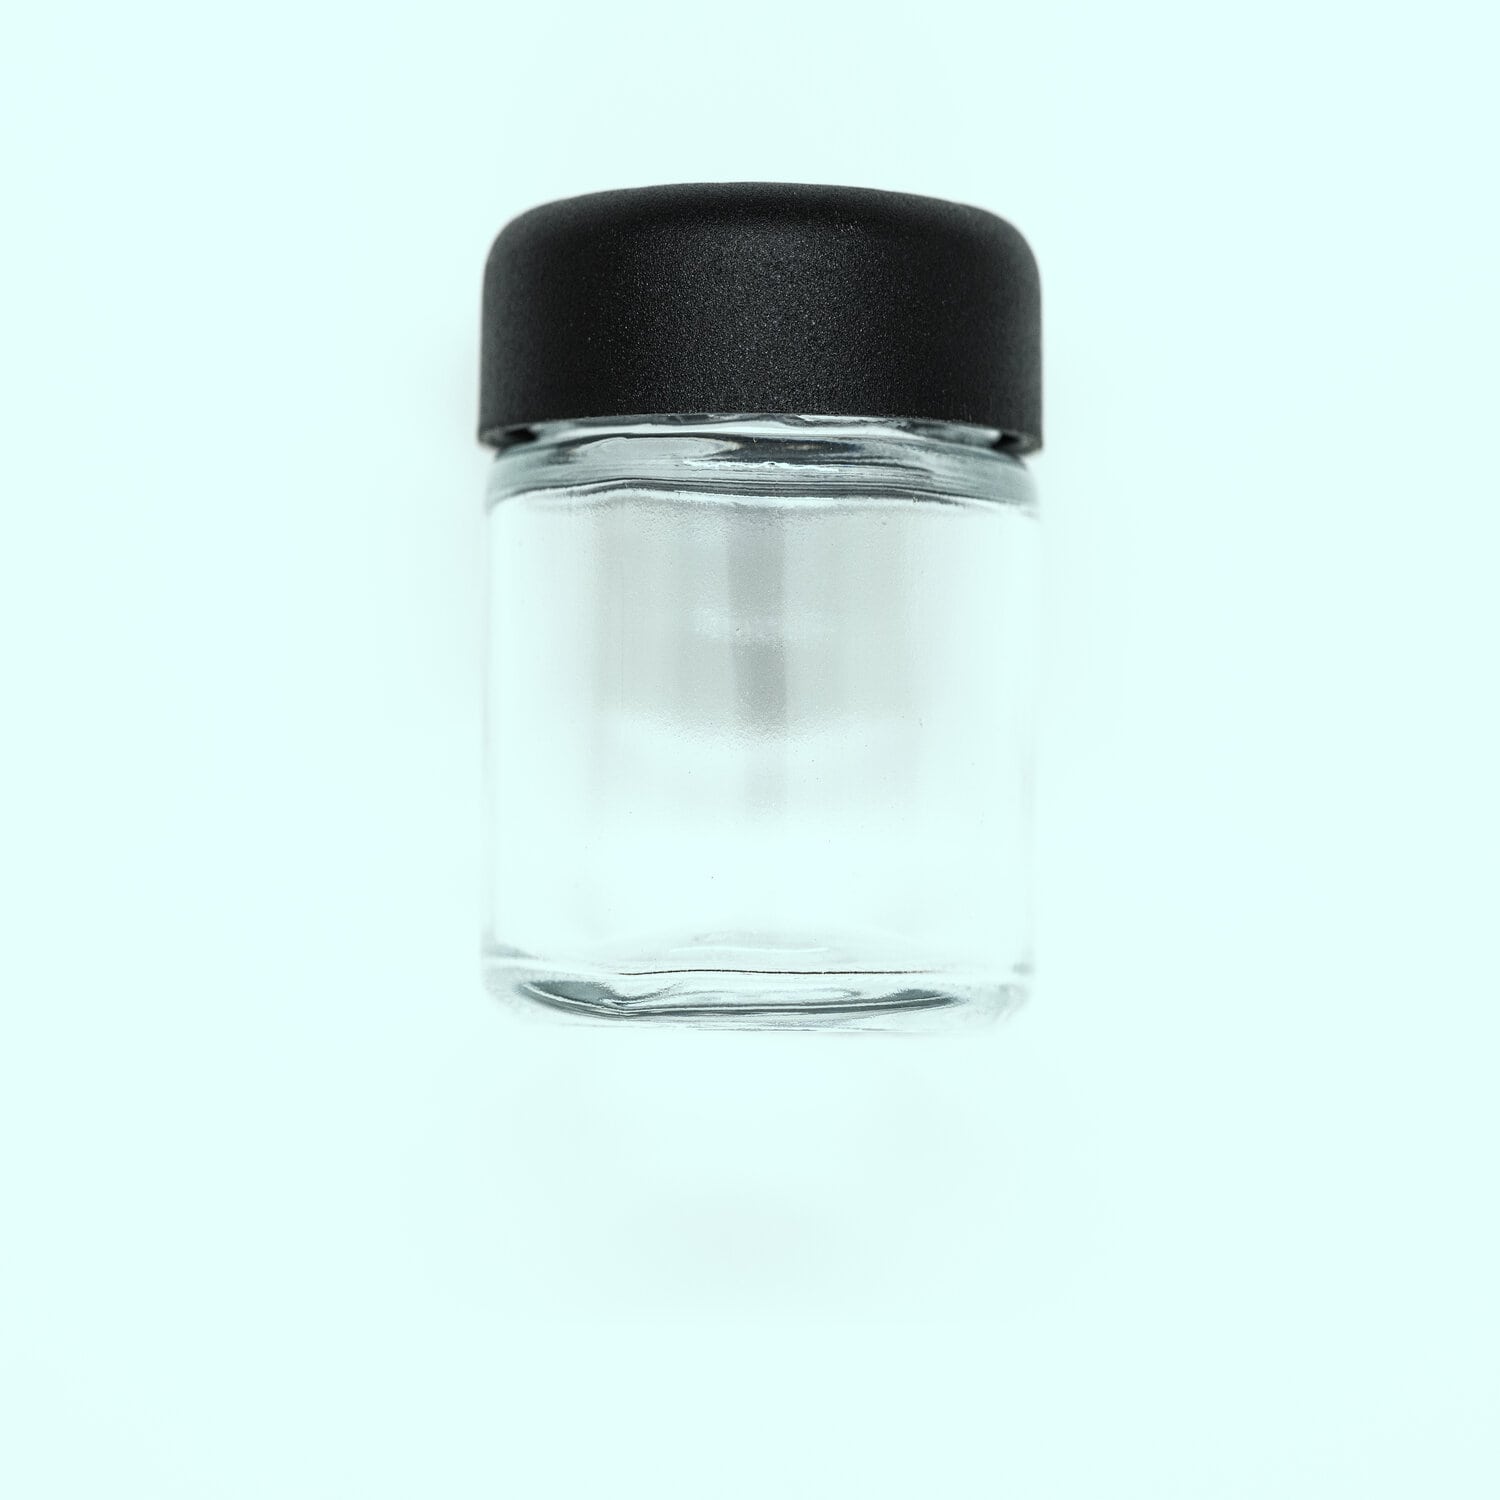 Black Glass Jar With Black Child Resistant Caps 2oz